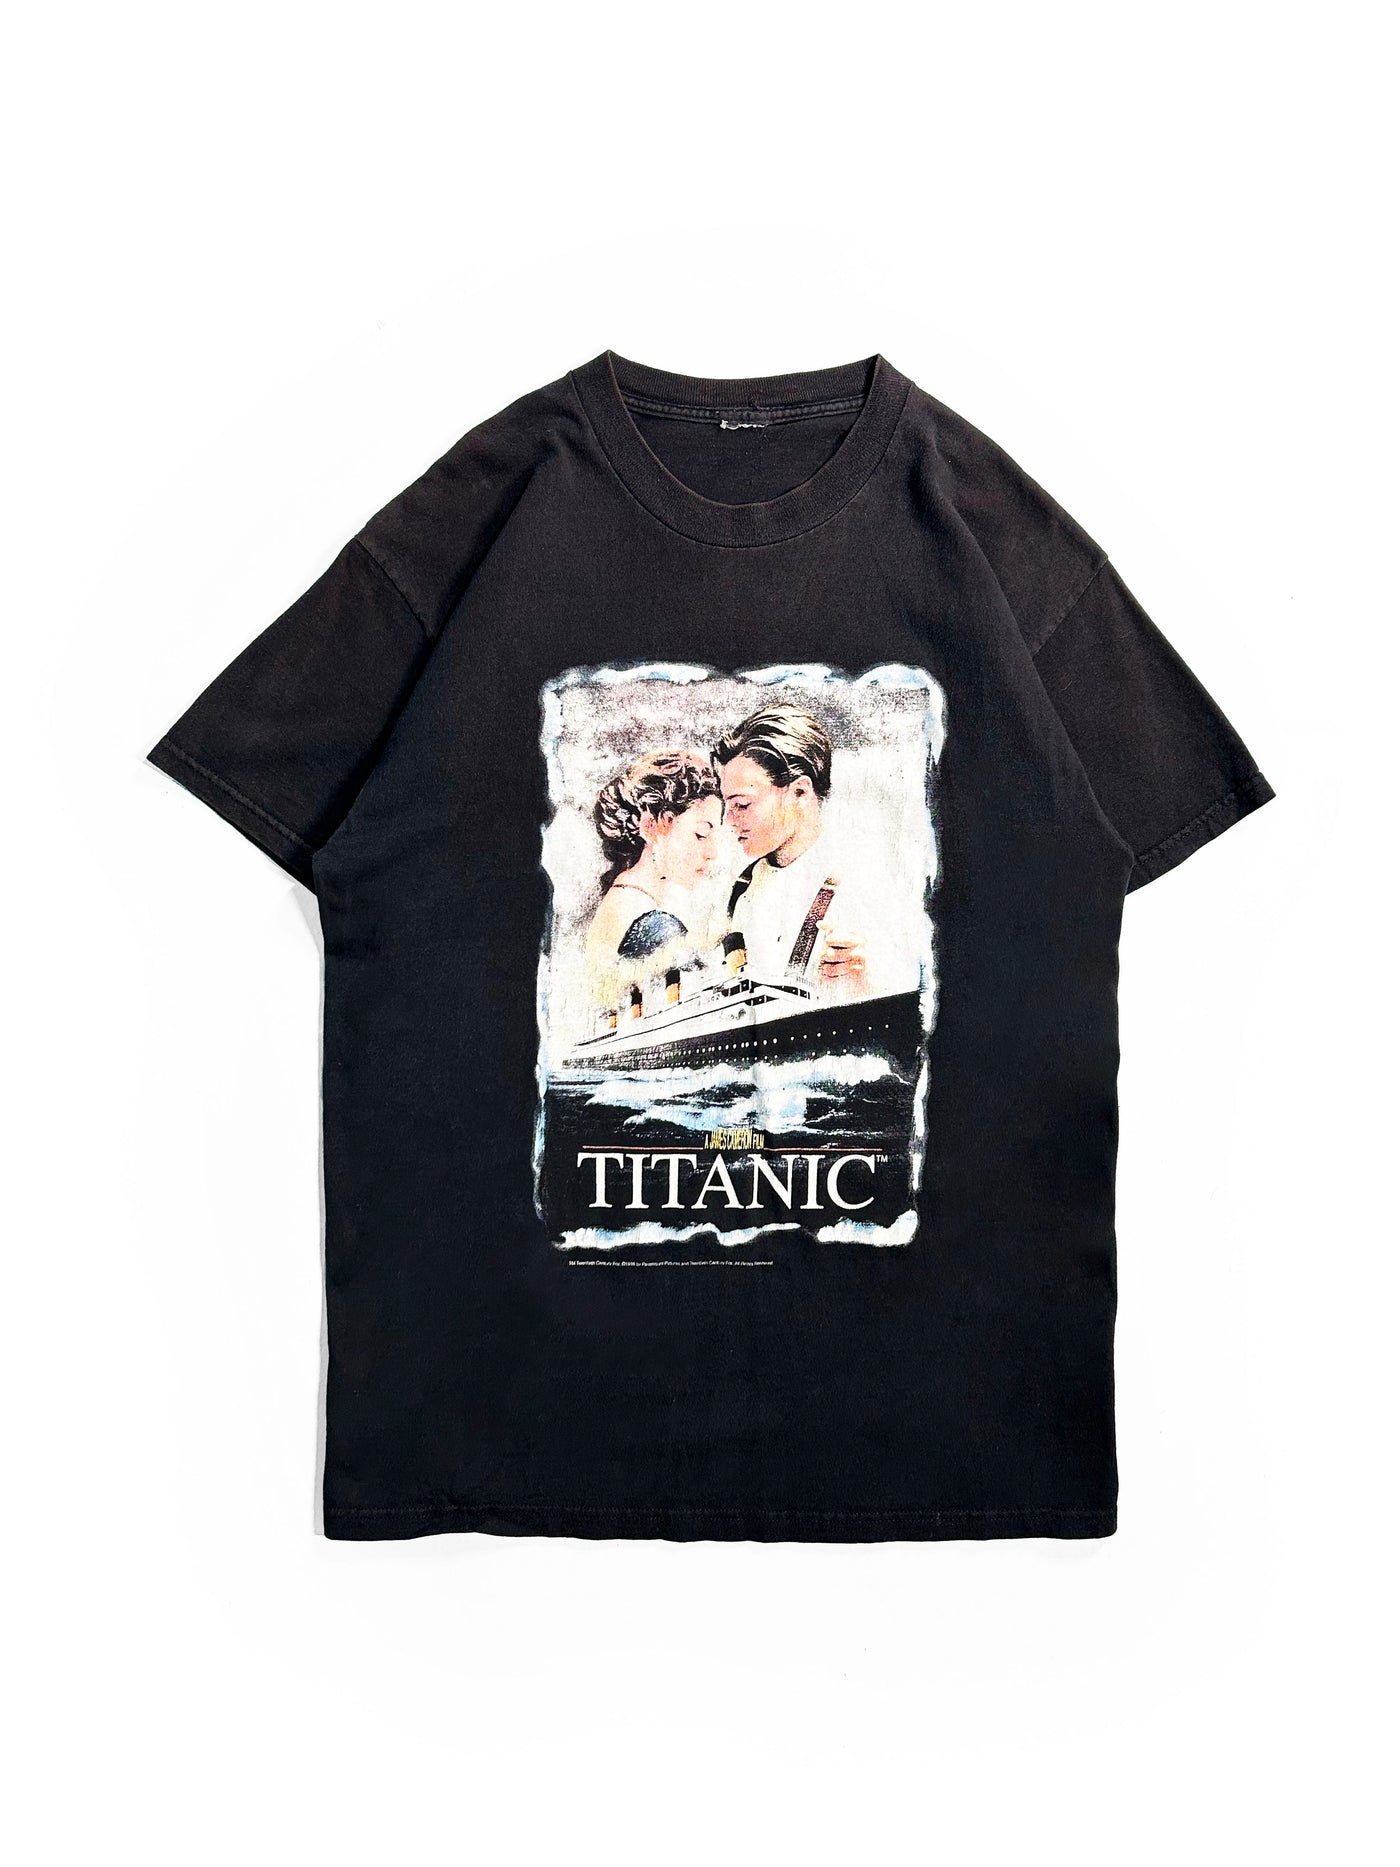 Vintage 1998 Titanic Movie Promo T-Shirt